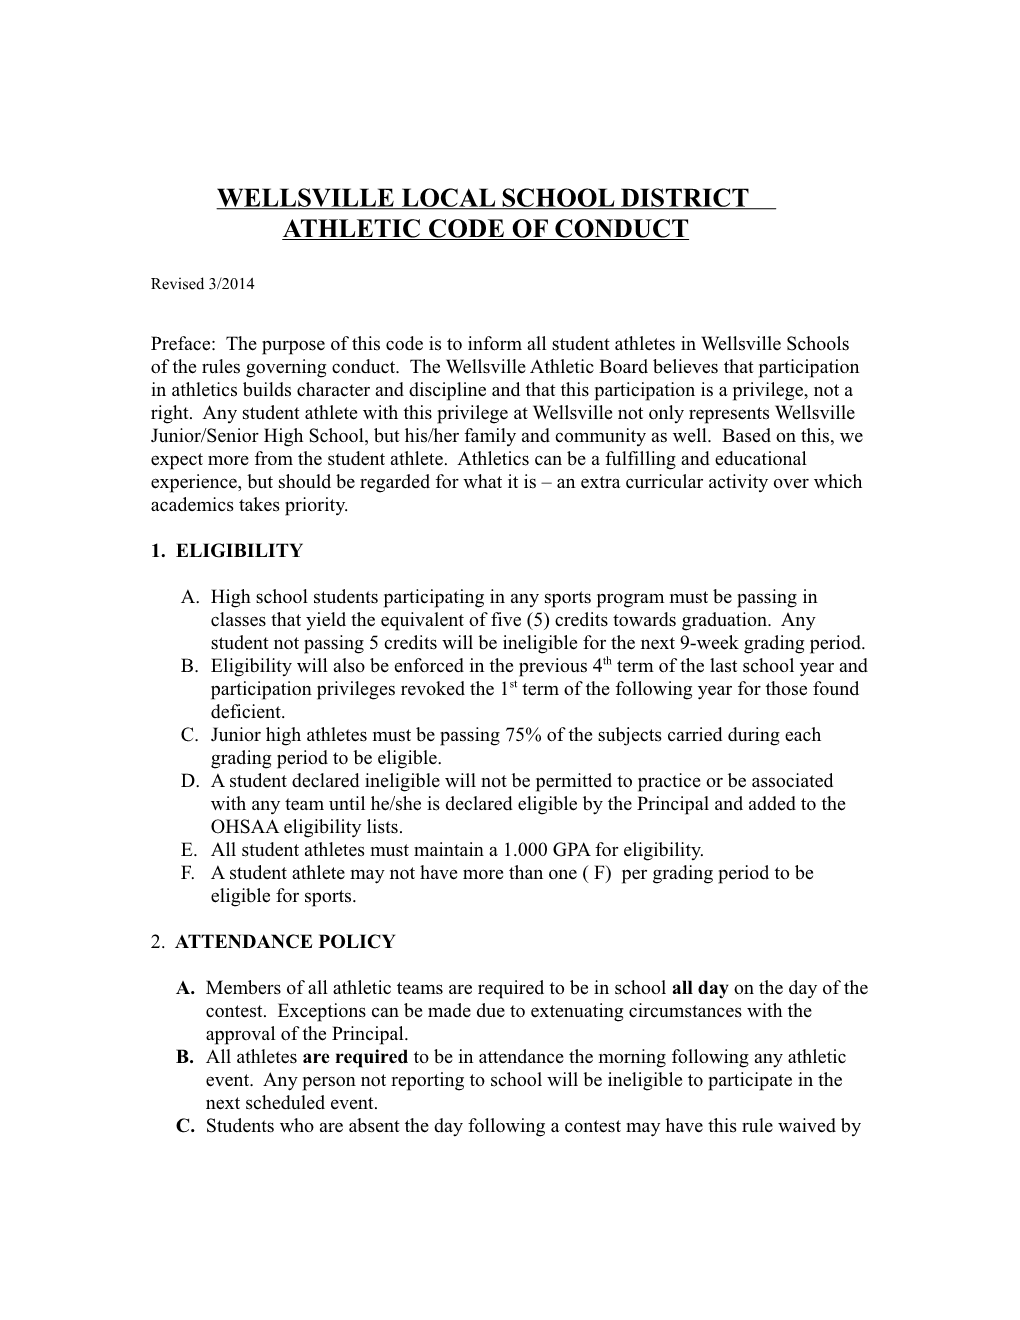 Wellsville Local School District